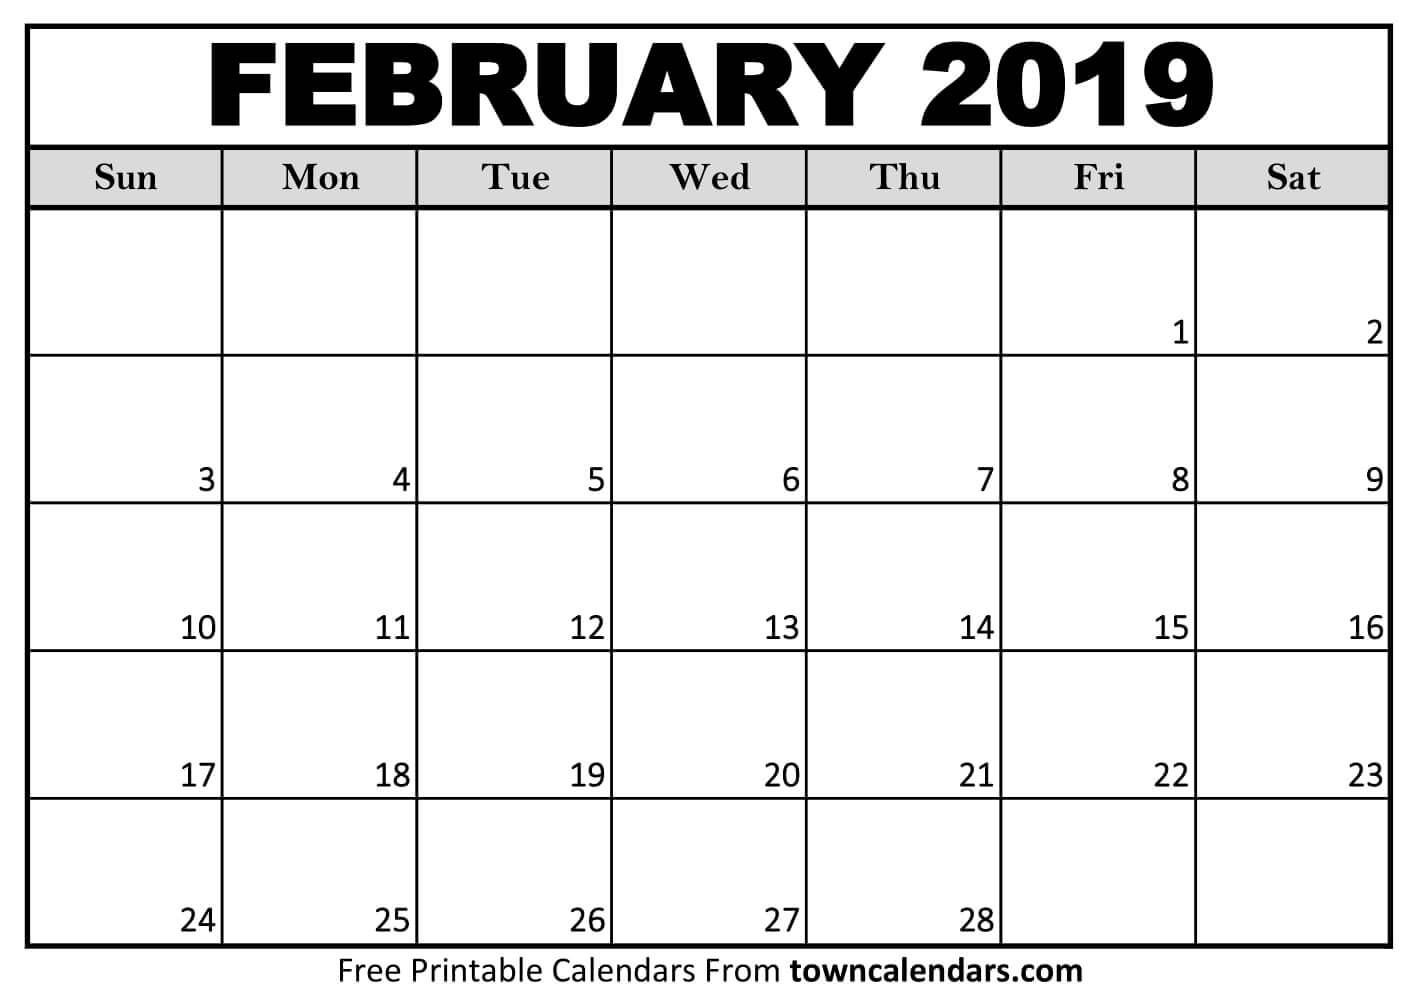 Printable February 2019 Calendar towncalendars